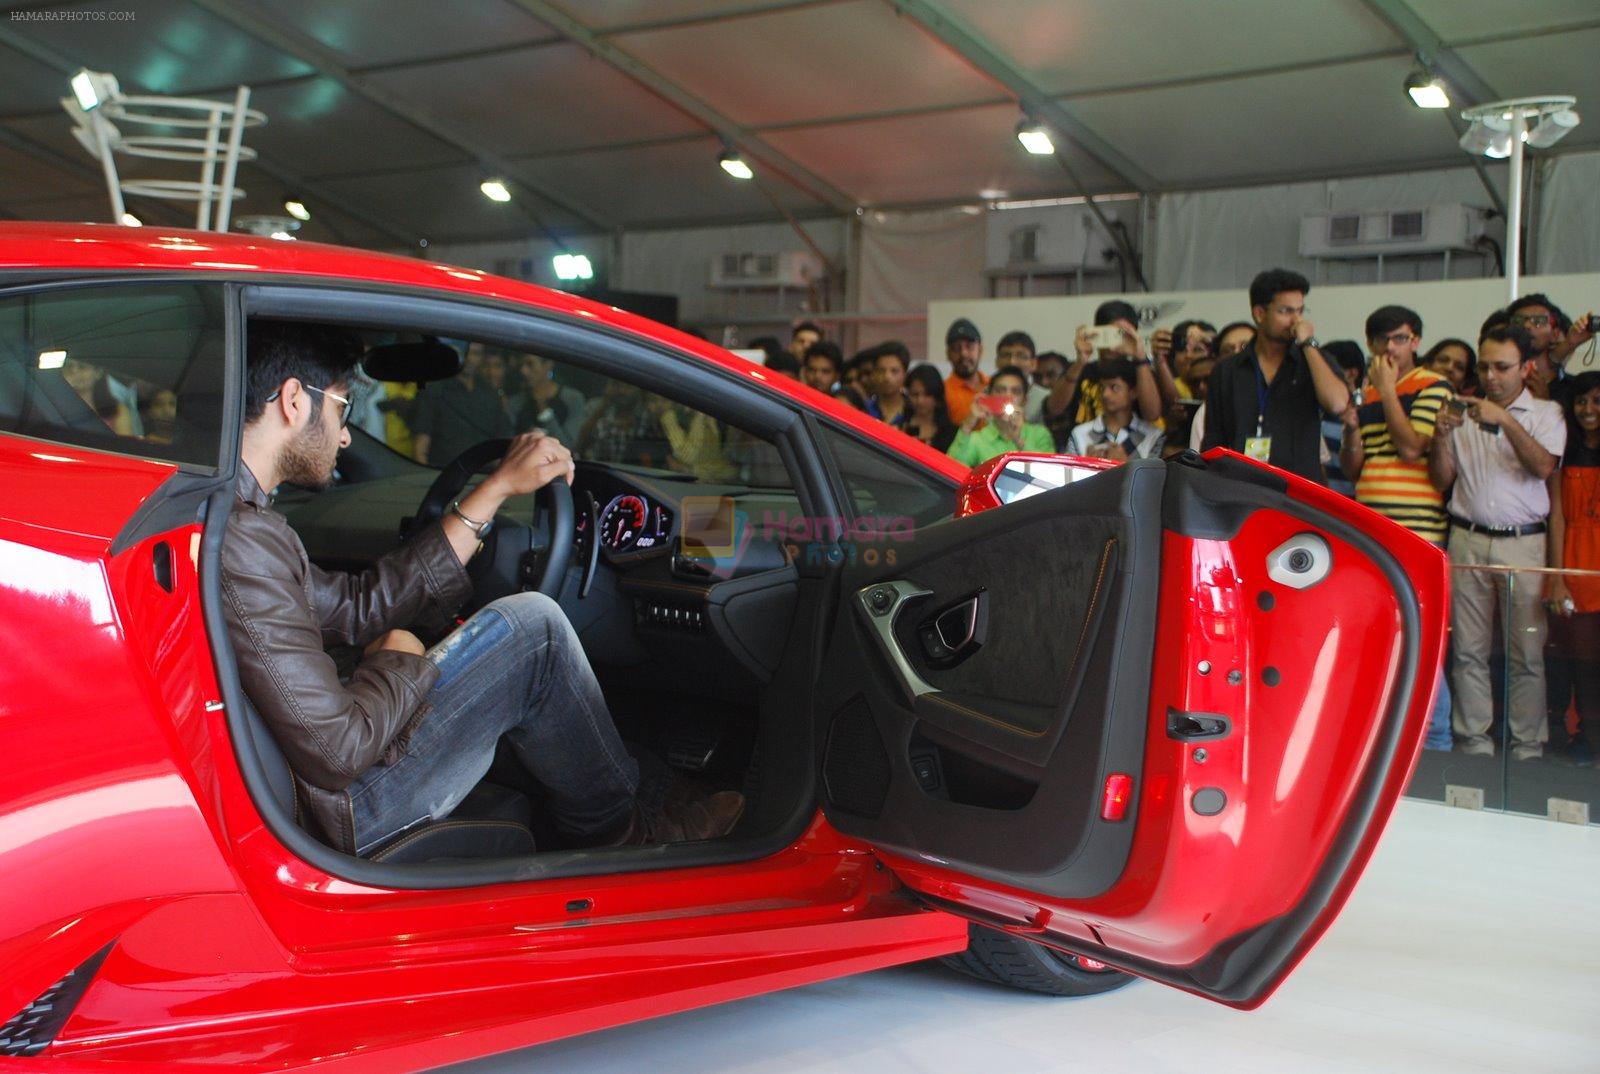 Ali Fazal at Auto car show in Mumbai on 14th Dec 2014